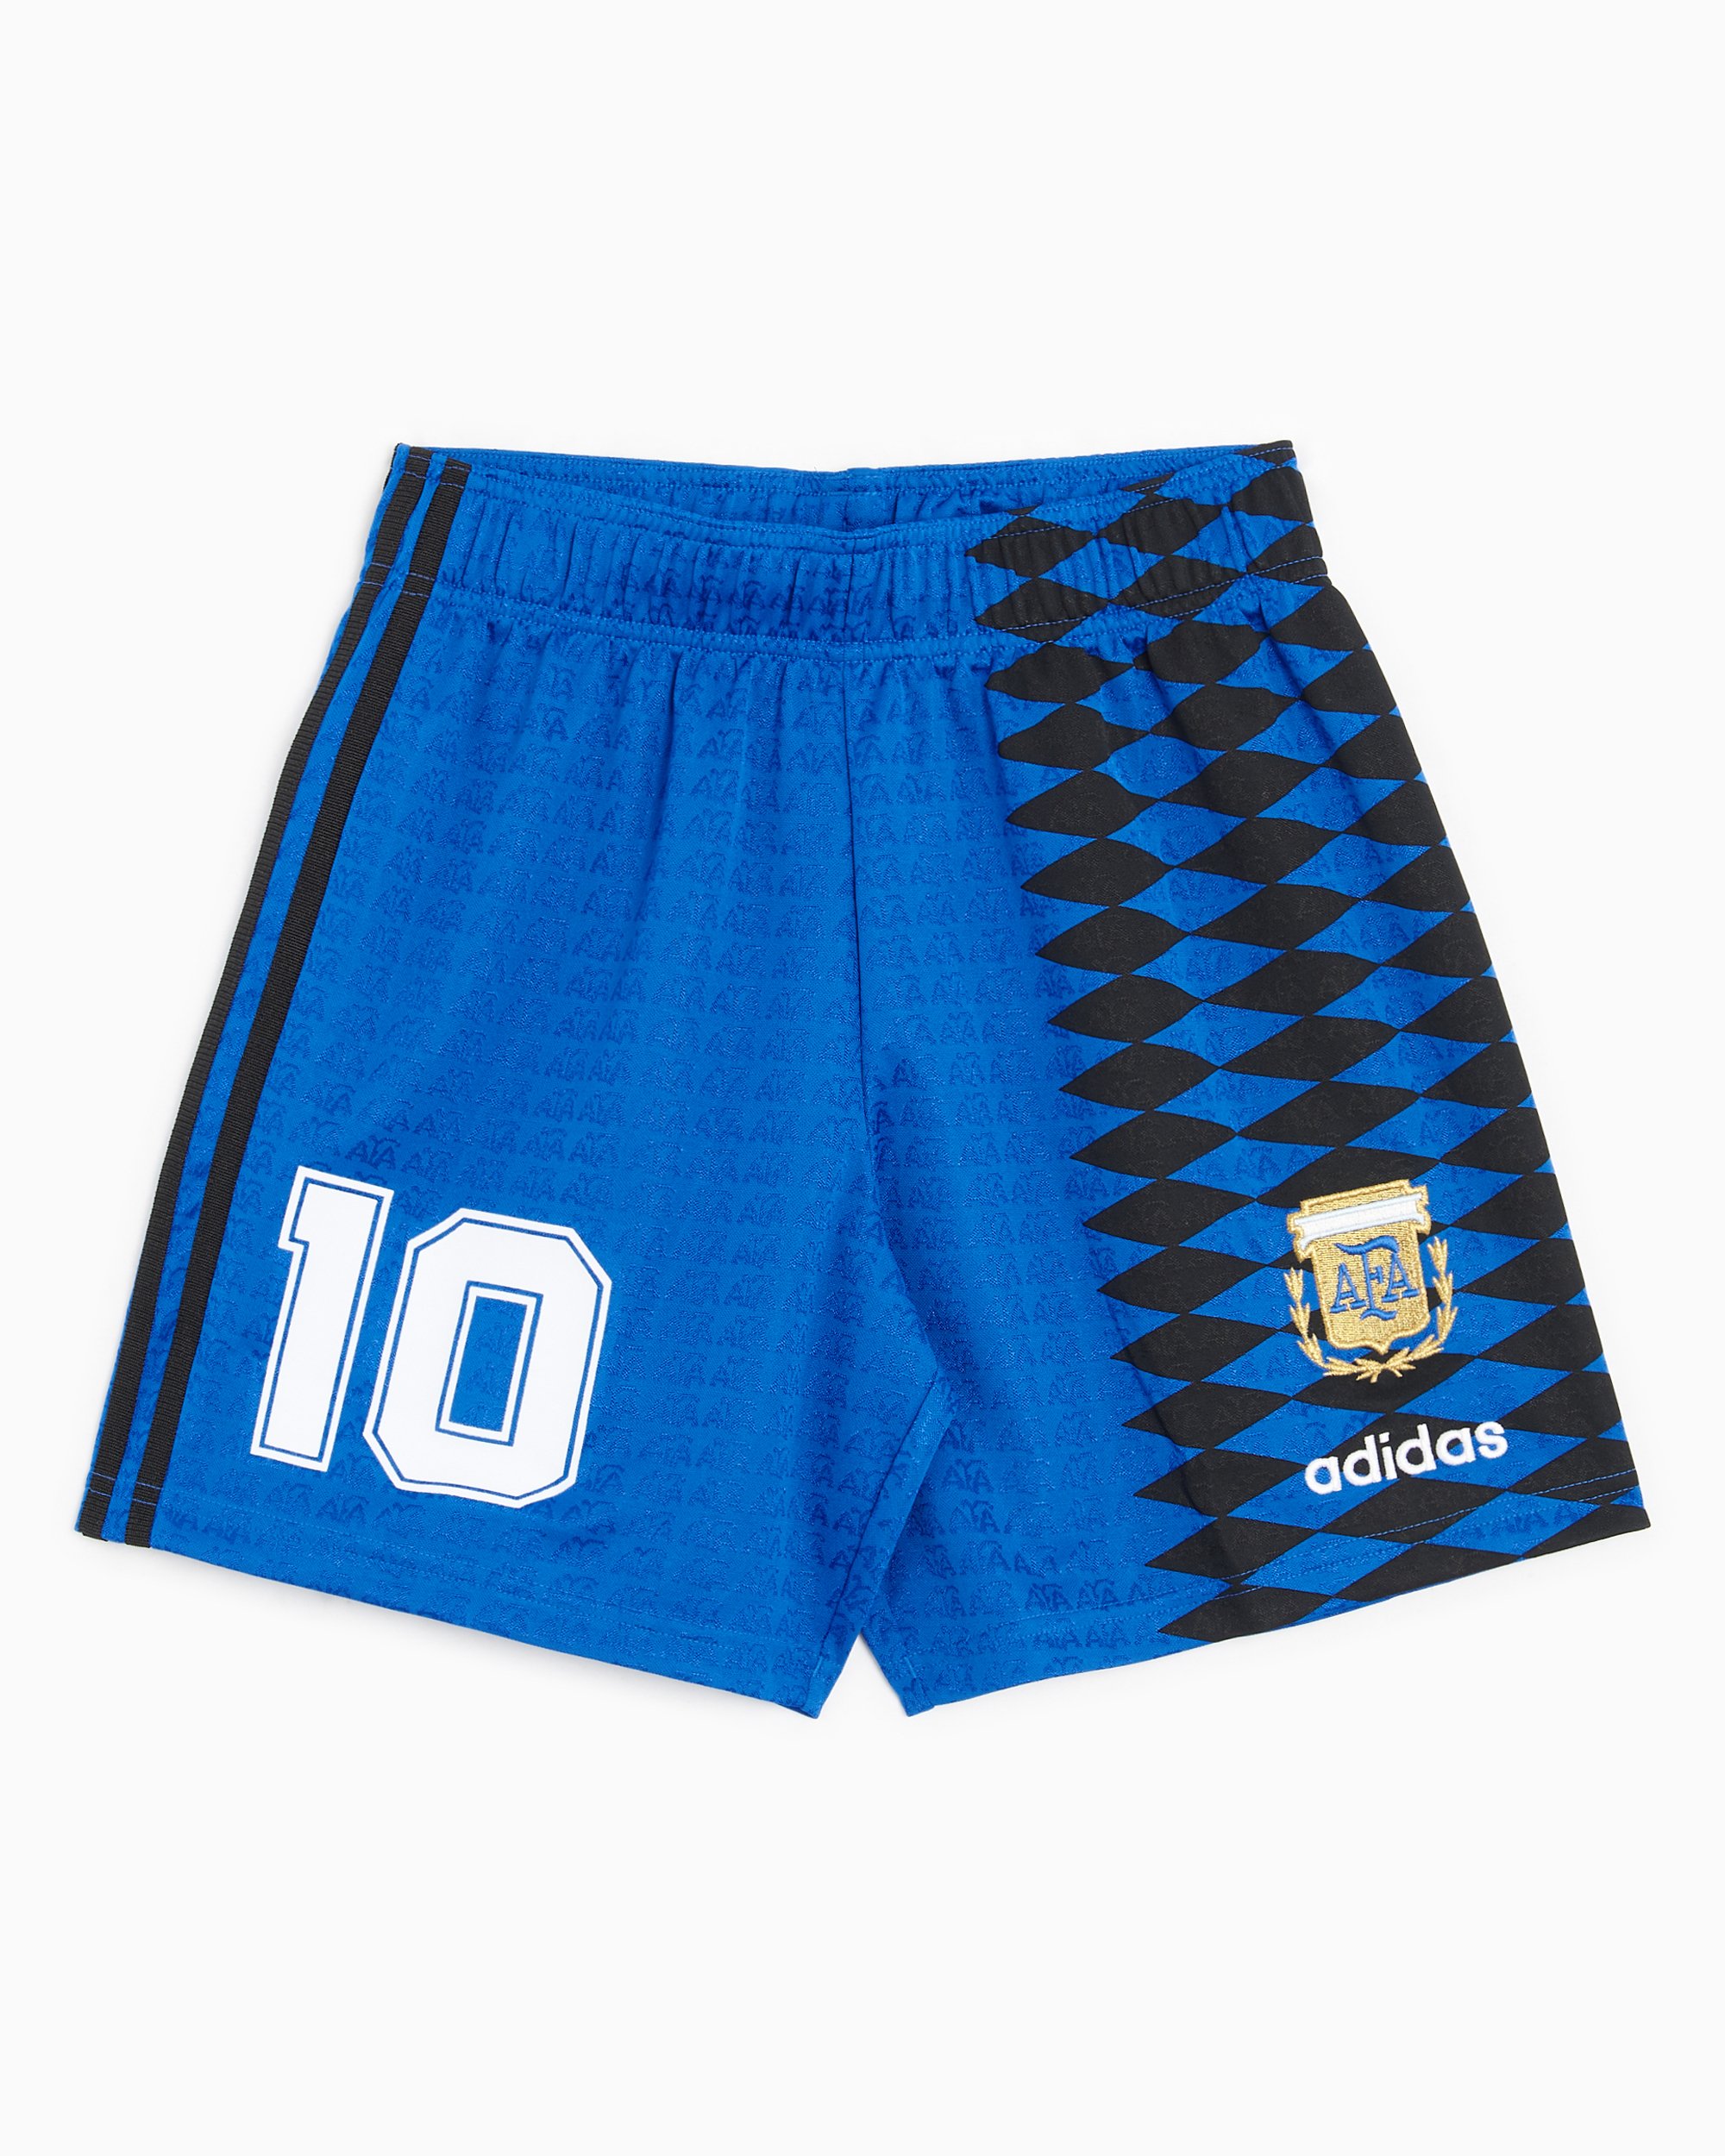 adidas Performance Football AFA Argentina 1994 Away Men's Shorts Preto,  Azul IS0265